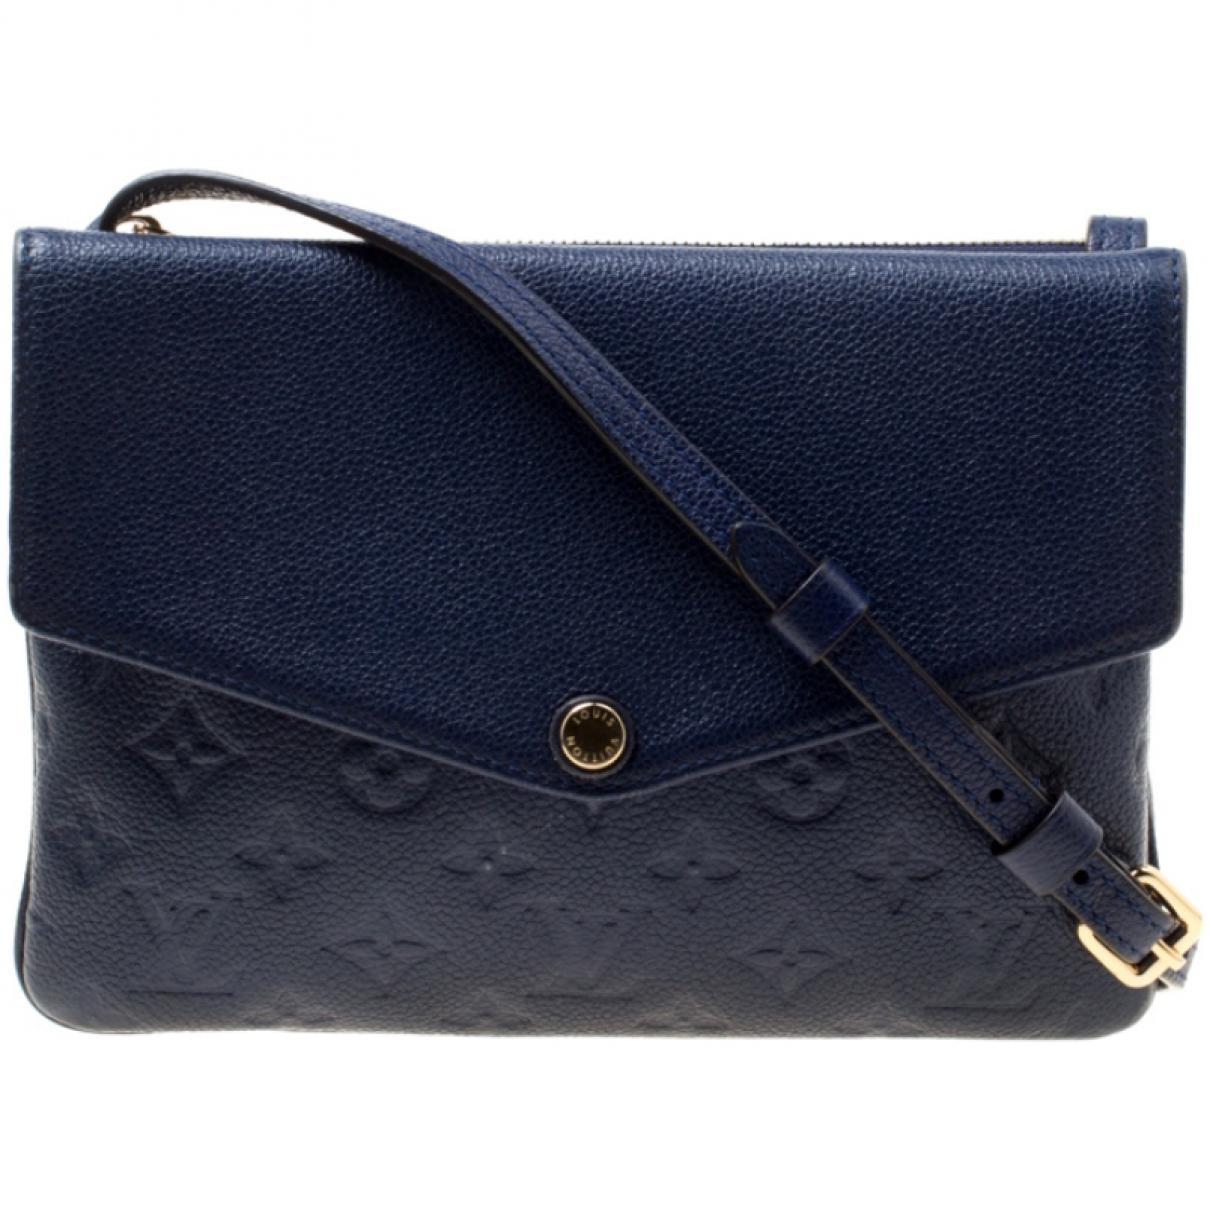 Louis Vuitton Leather Handbag in Blue - Lyst